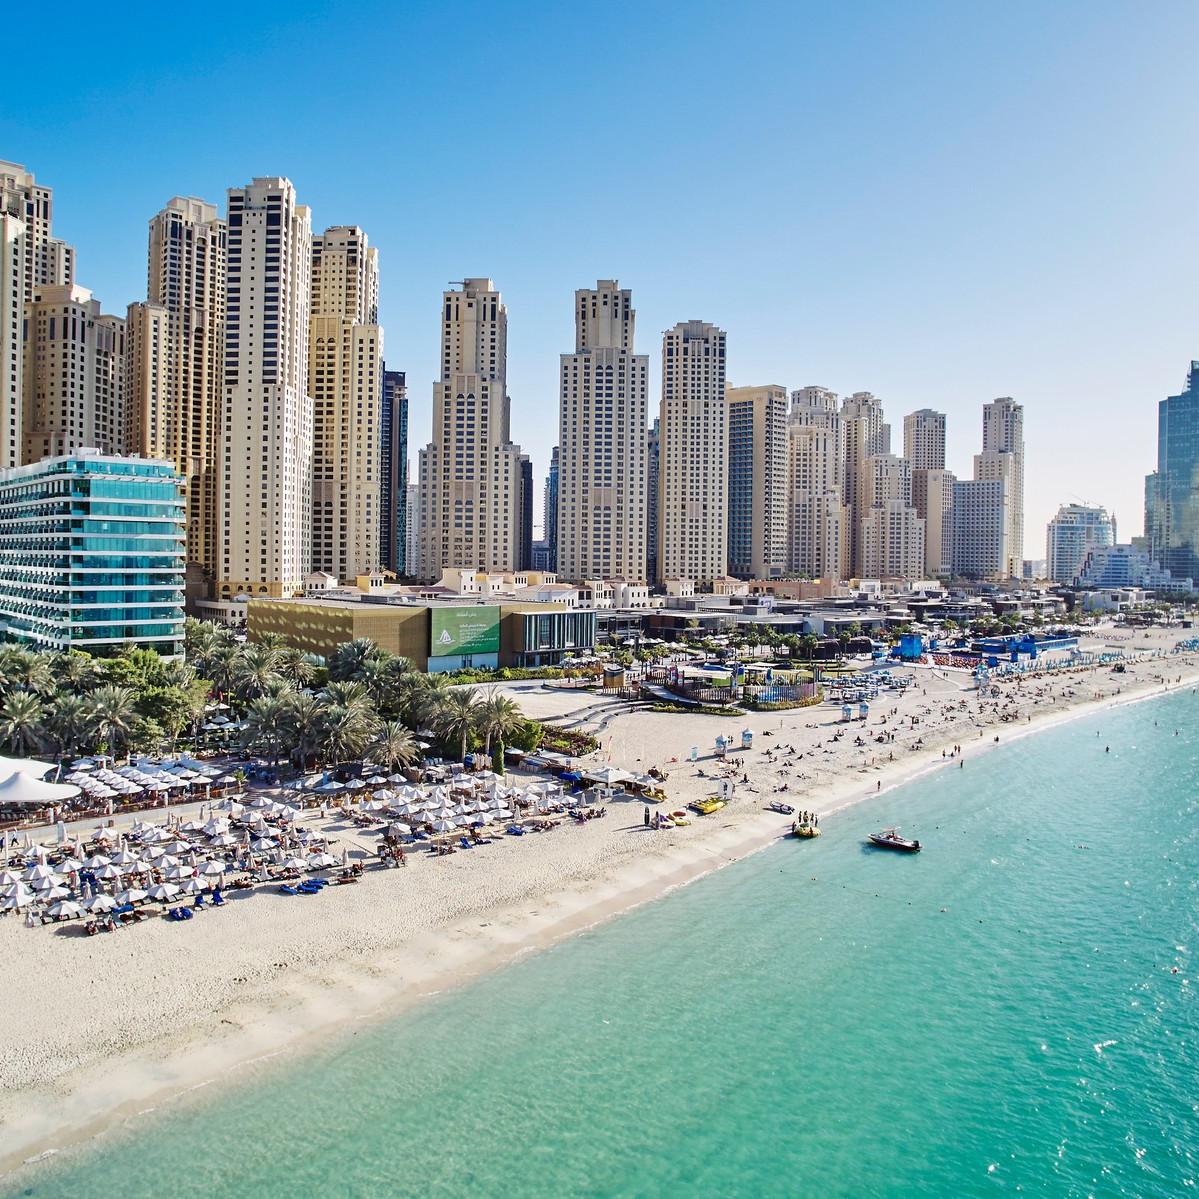 Hilton Dubai Jumeirah amwaj rotana jumeirah beach dubai